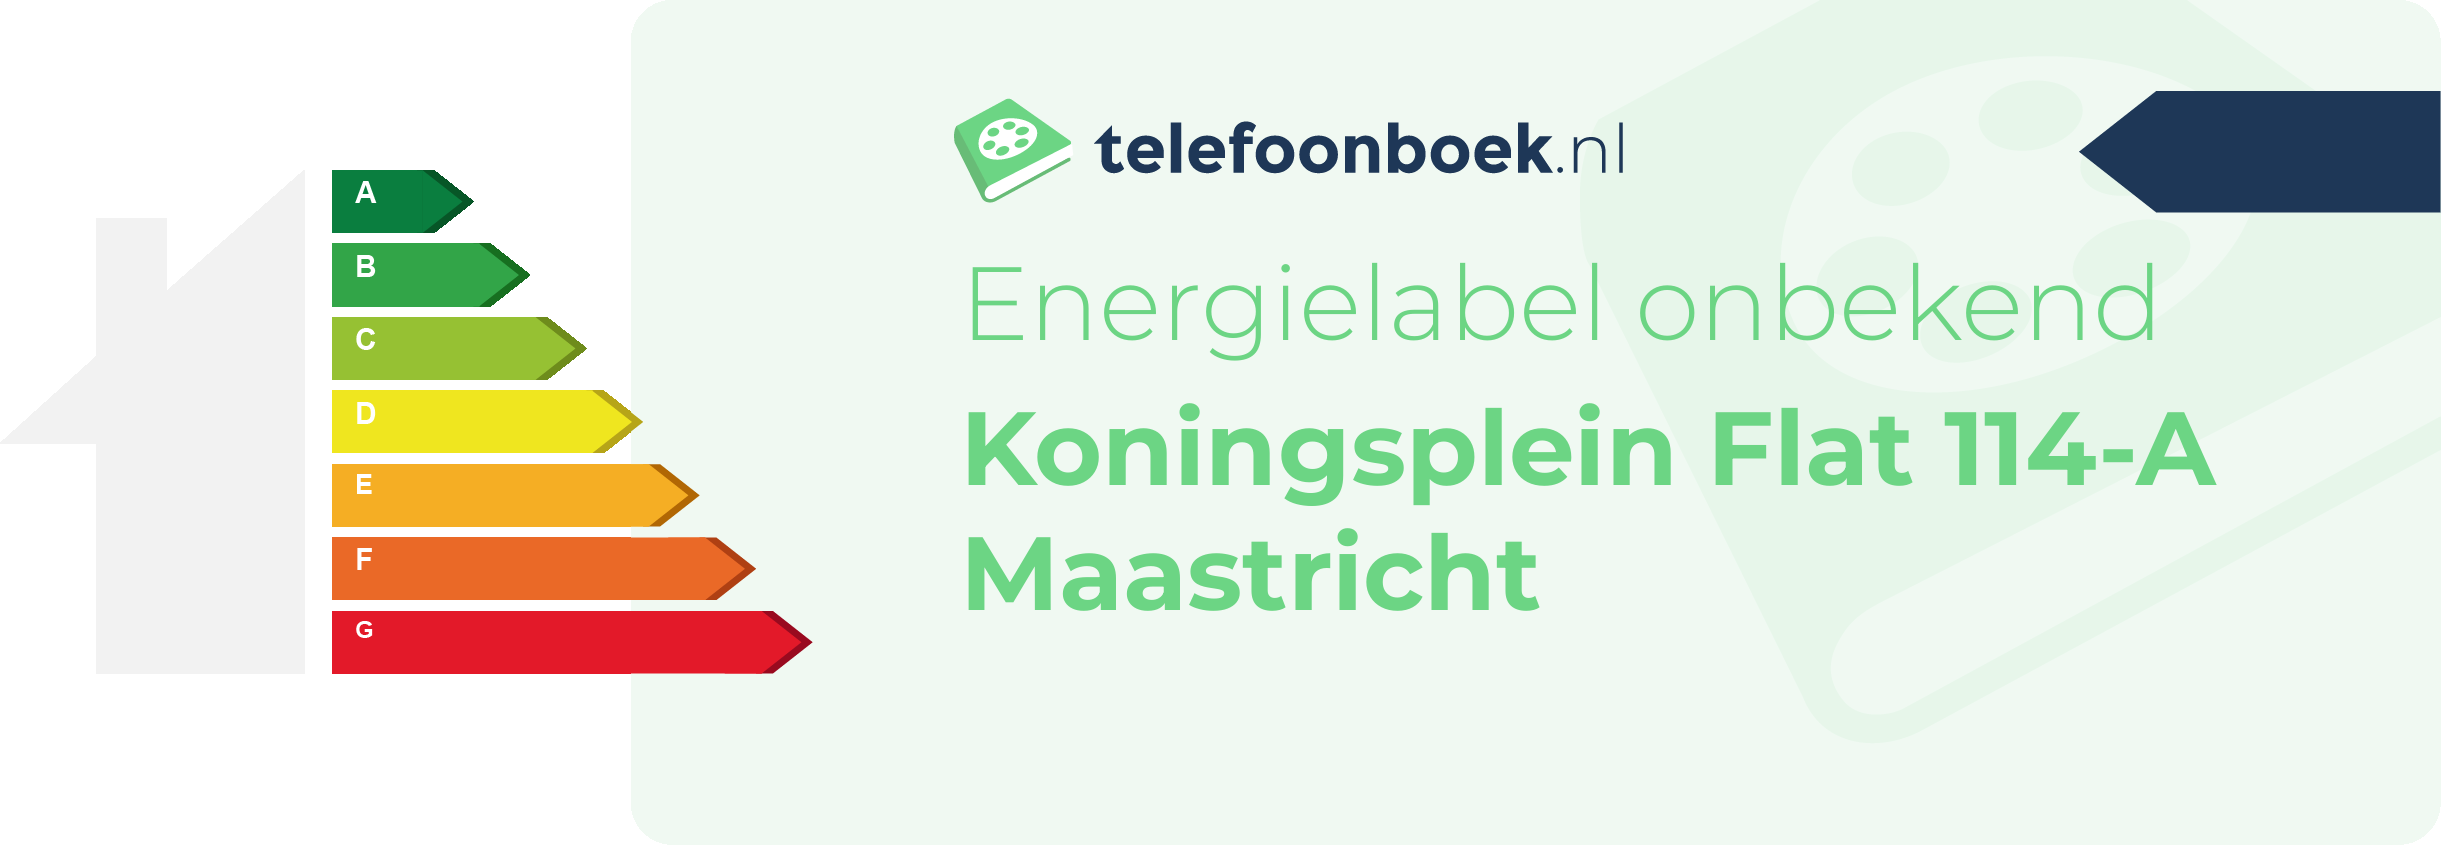 Energielabel Koningsplein Flat 114-A Maastricht